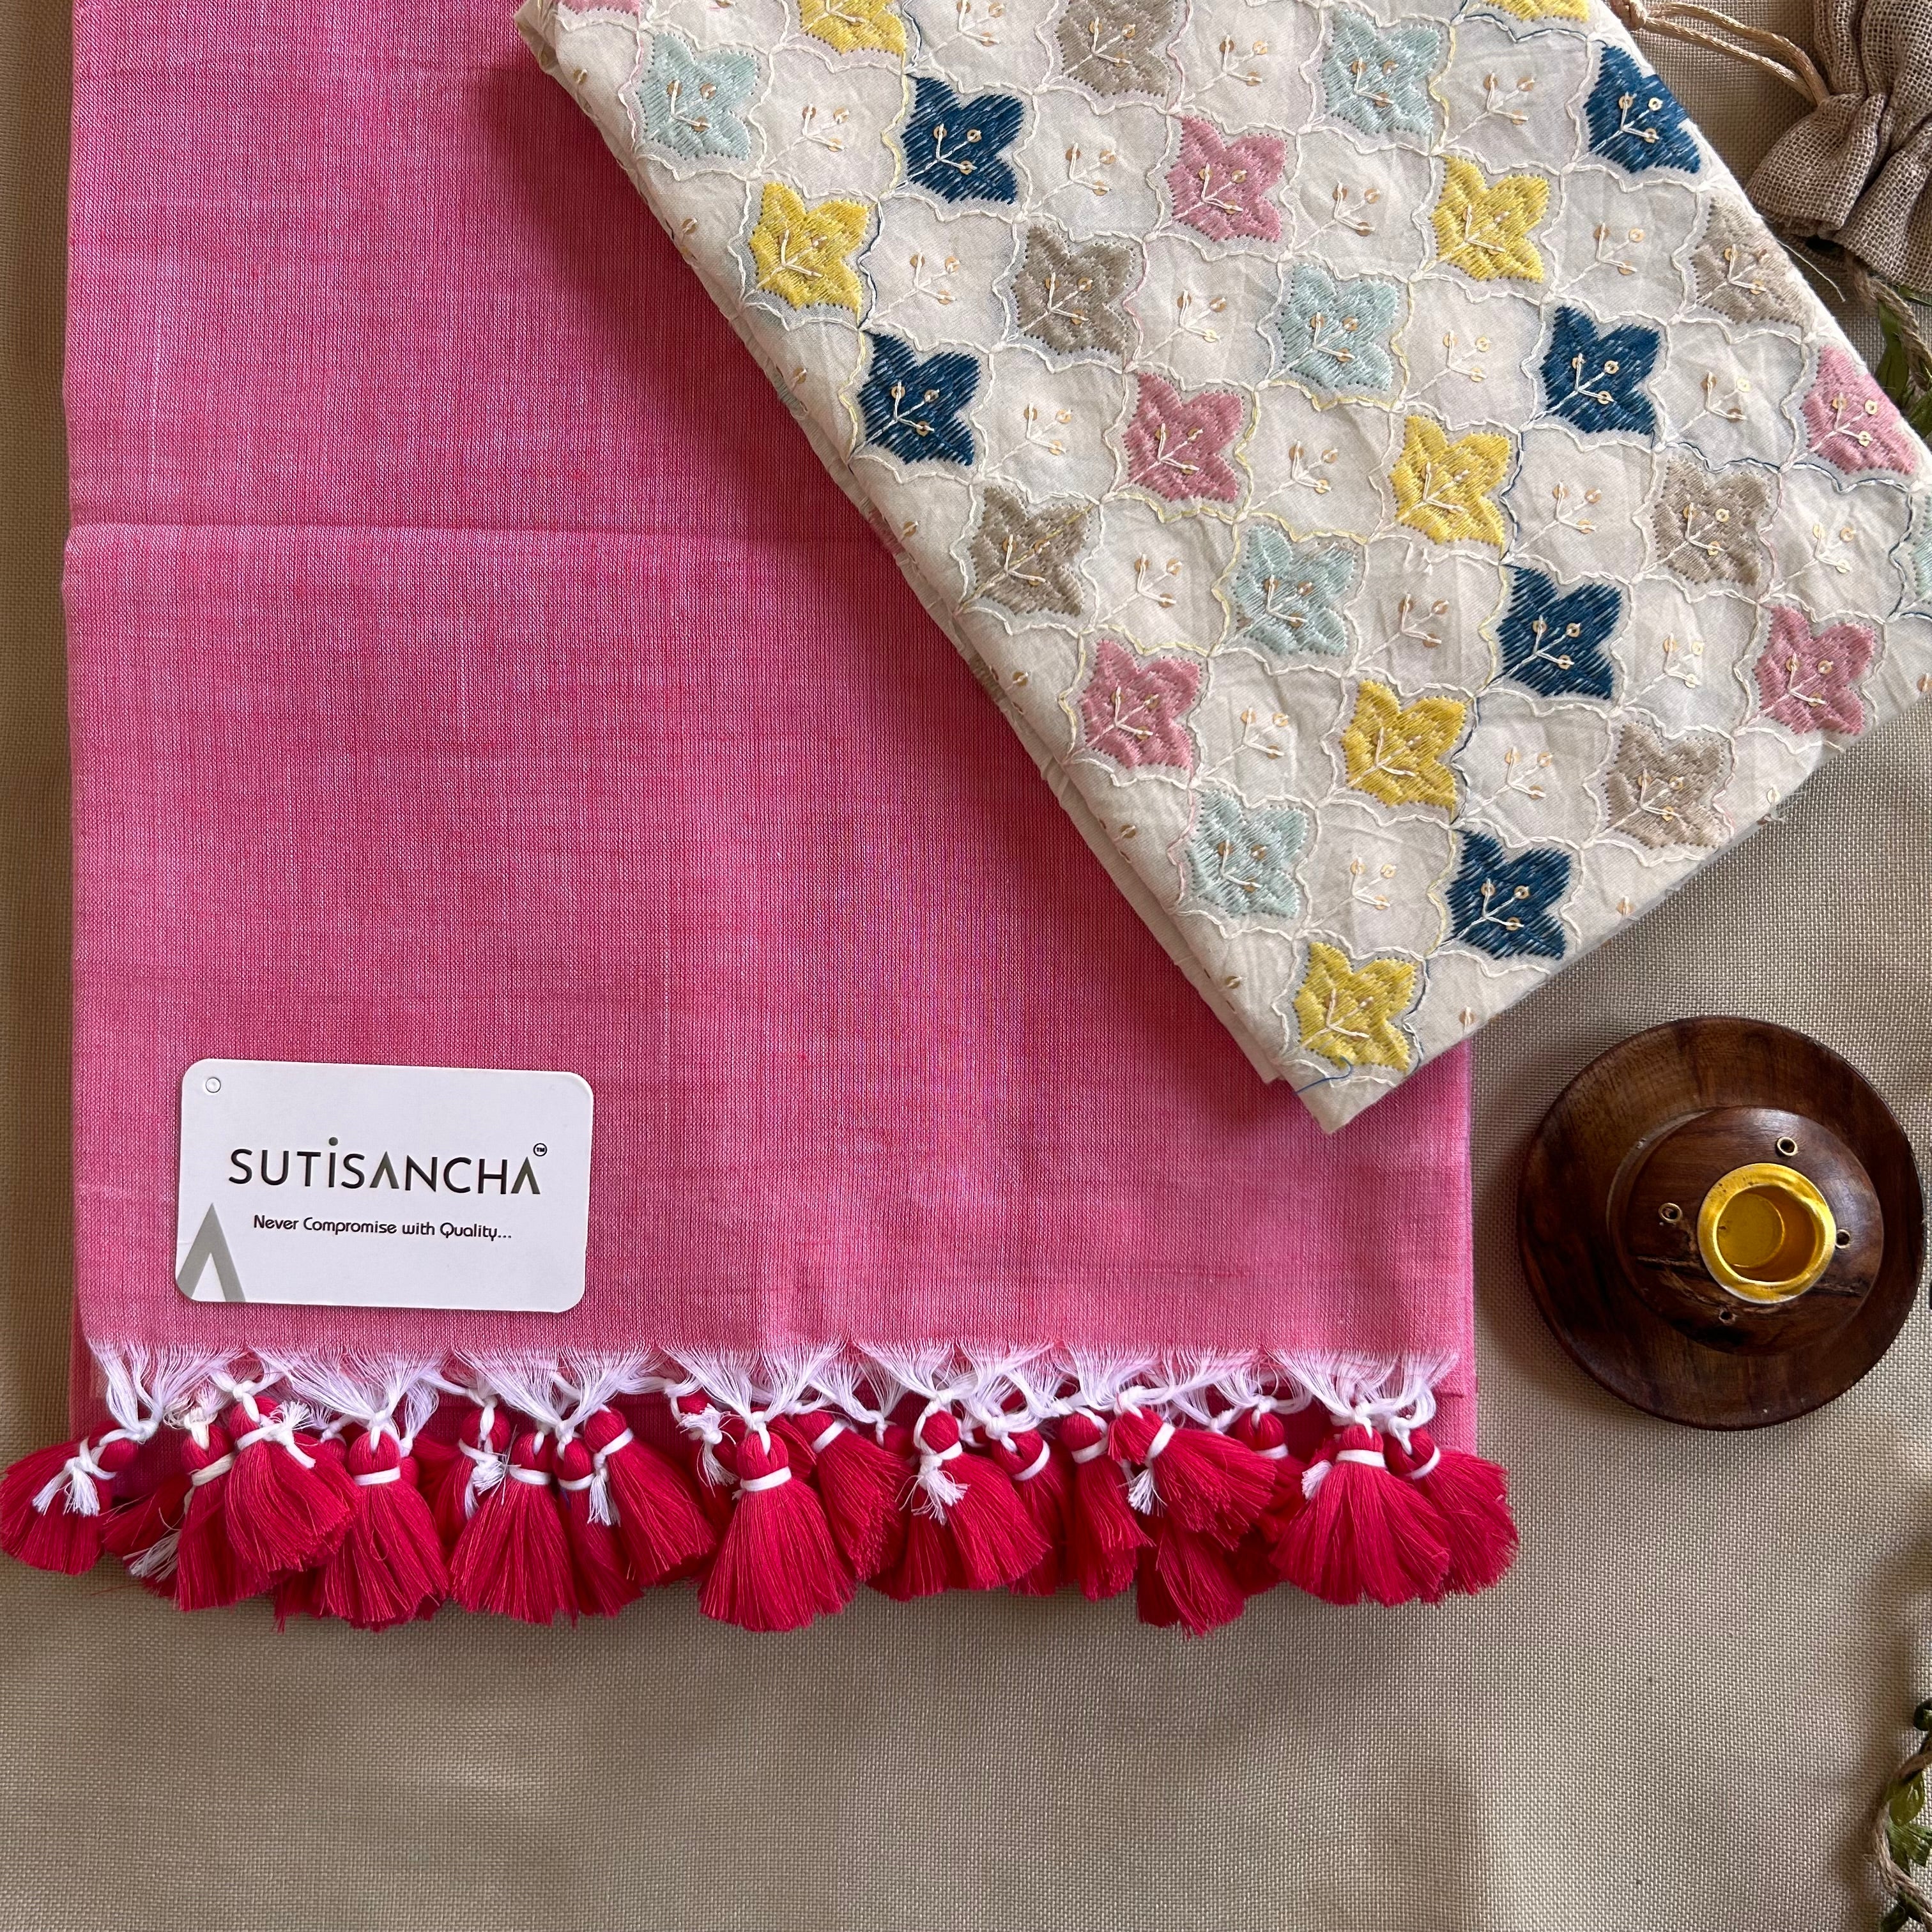 Sutisancha Peach Handloom Cotton Saree with Designer Blouse